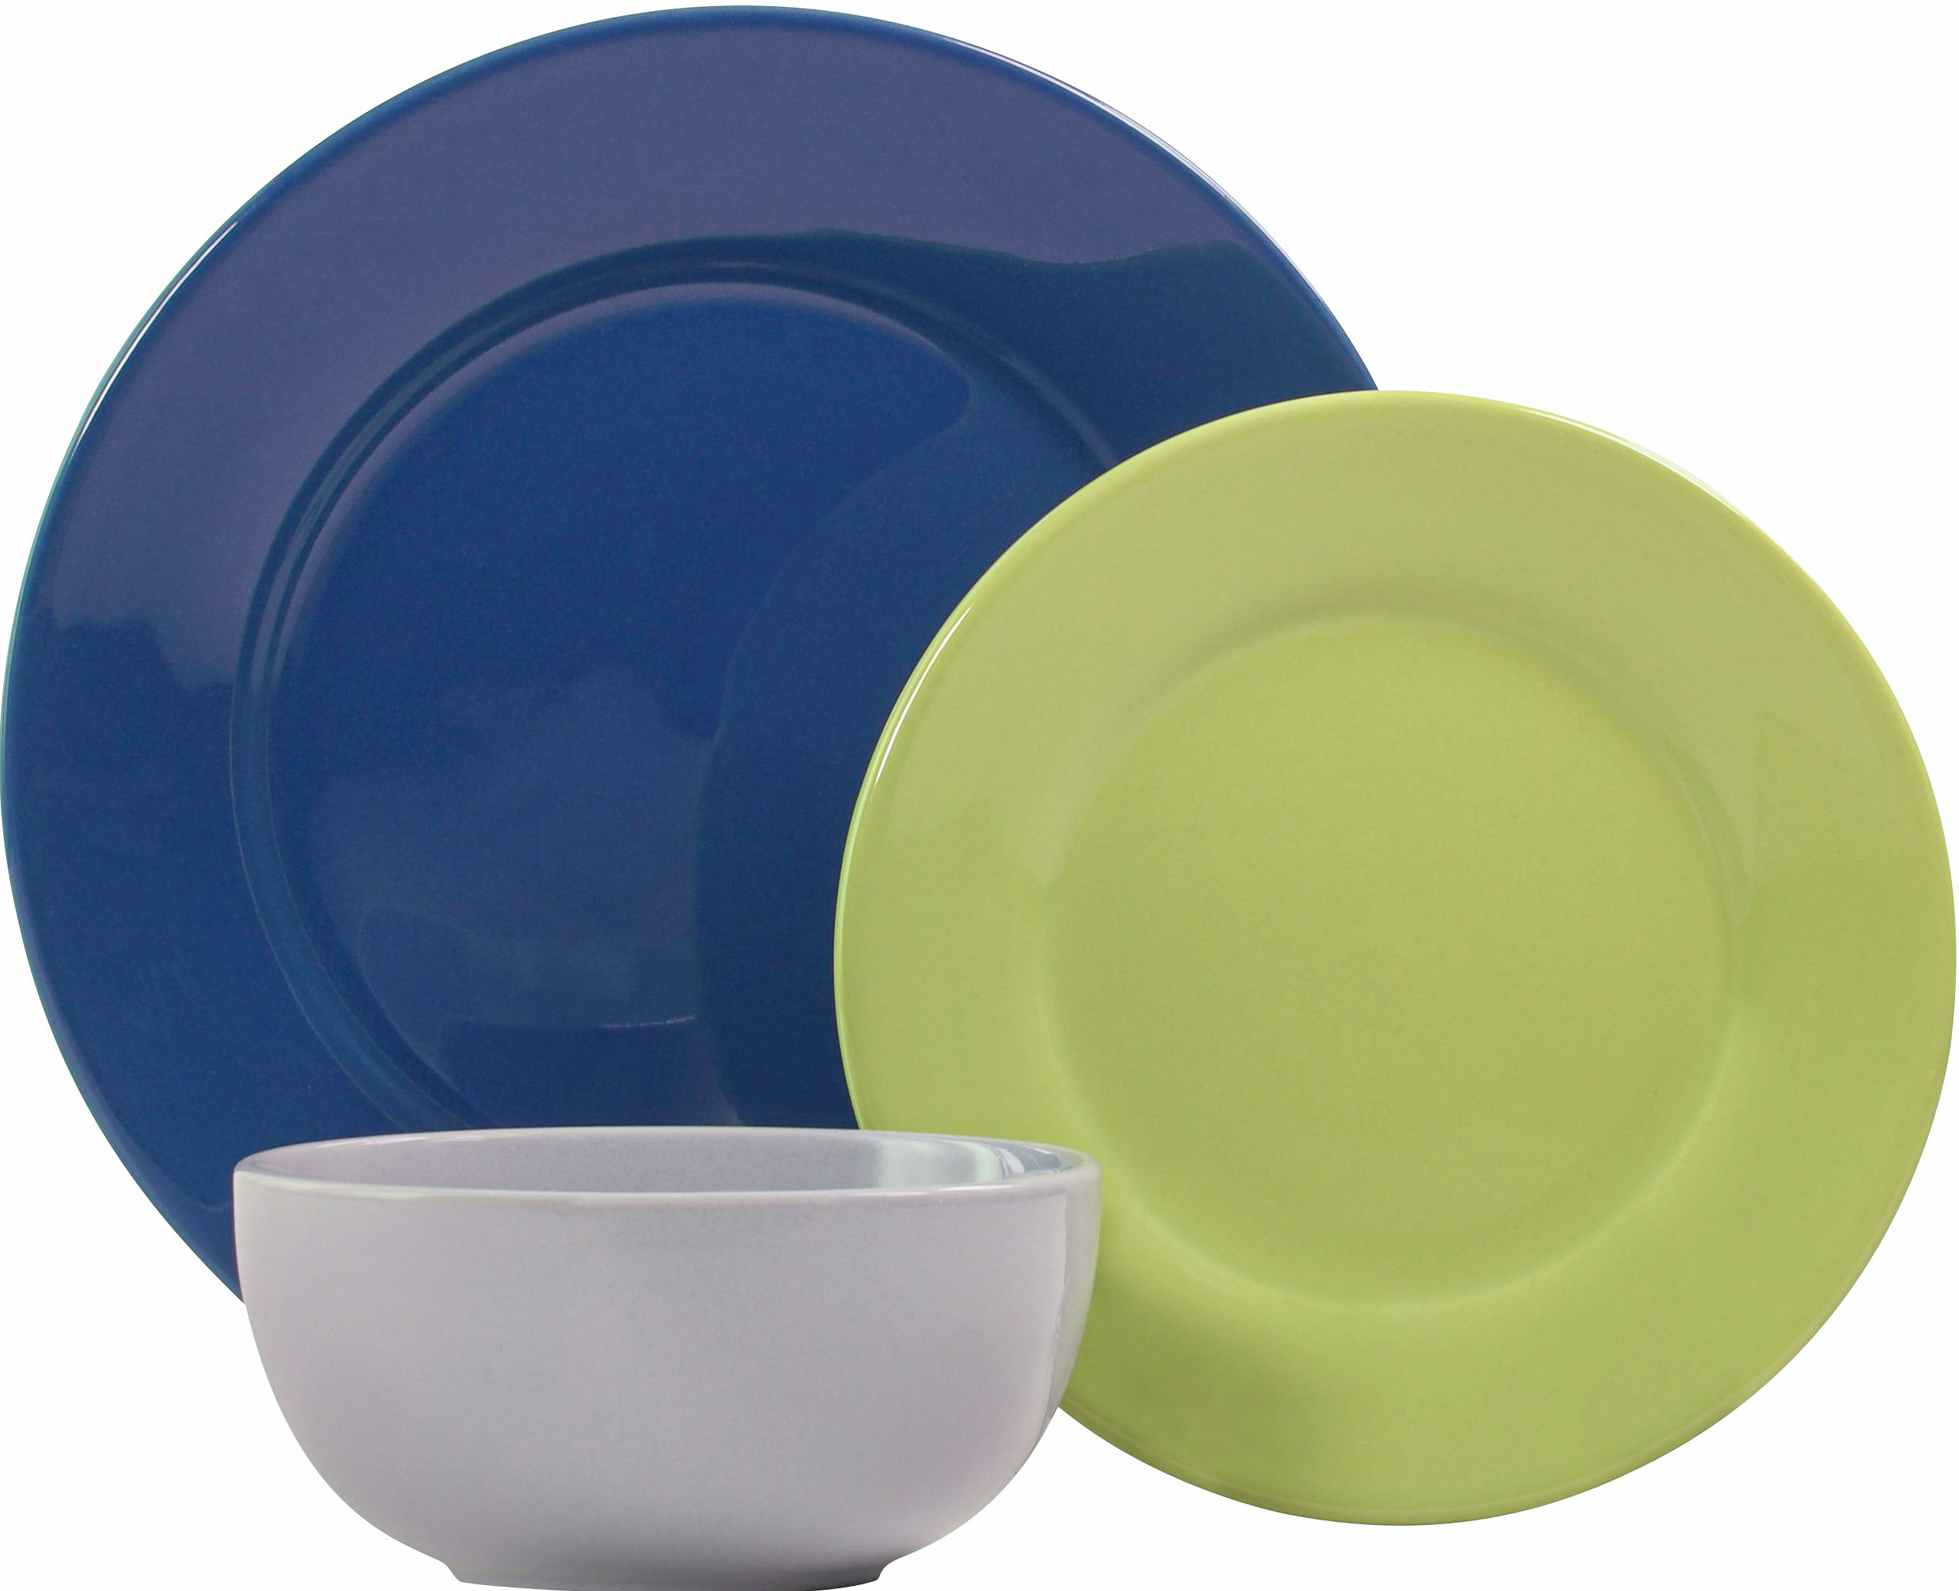 walmart-dinnerware-sets-mainstays-cool-tones-2022